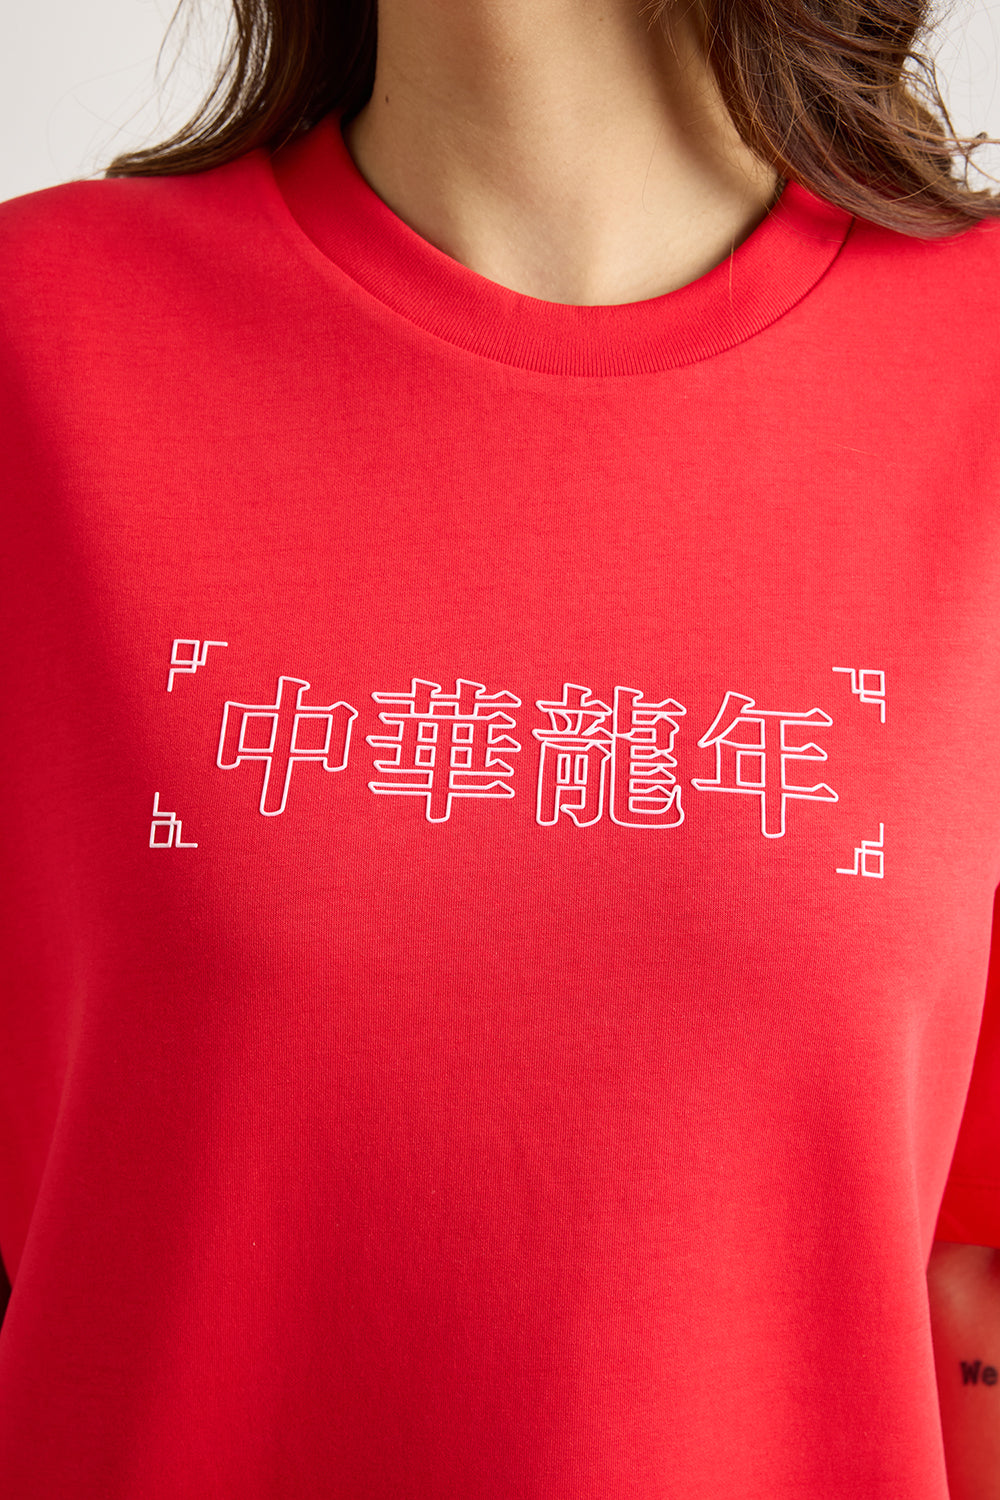 Translate me T-shirt